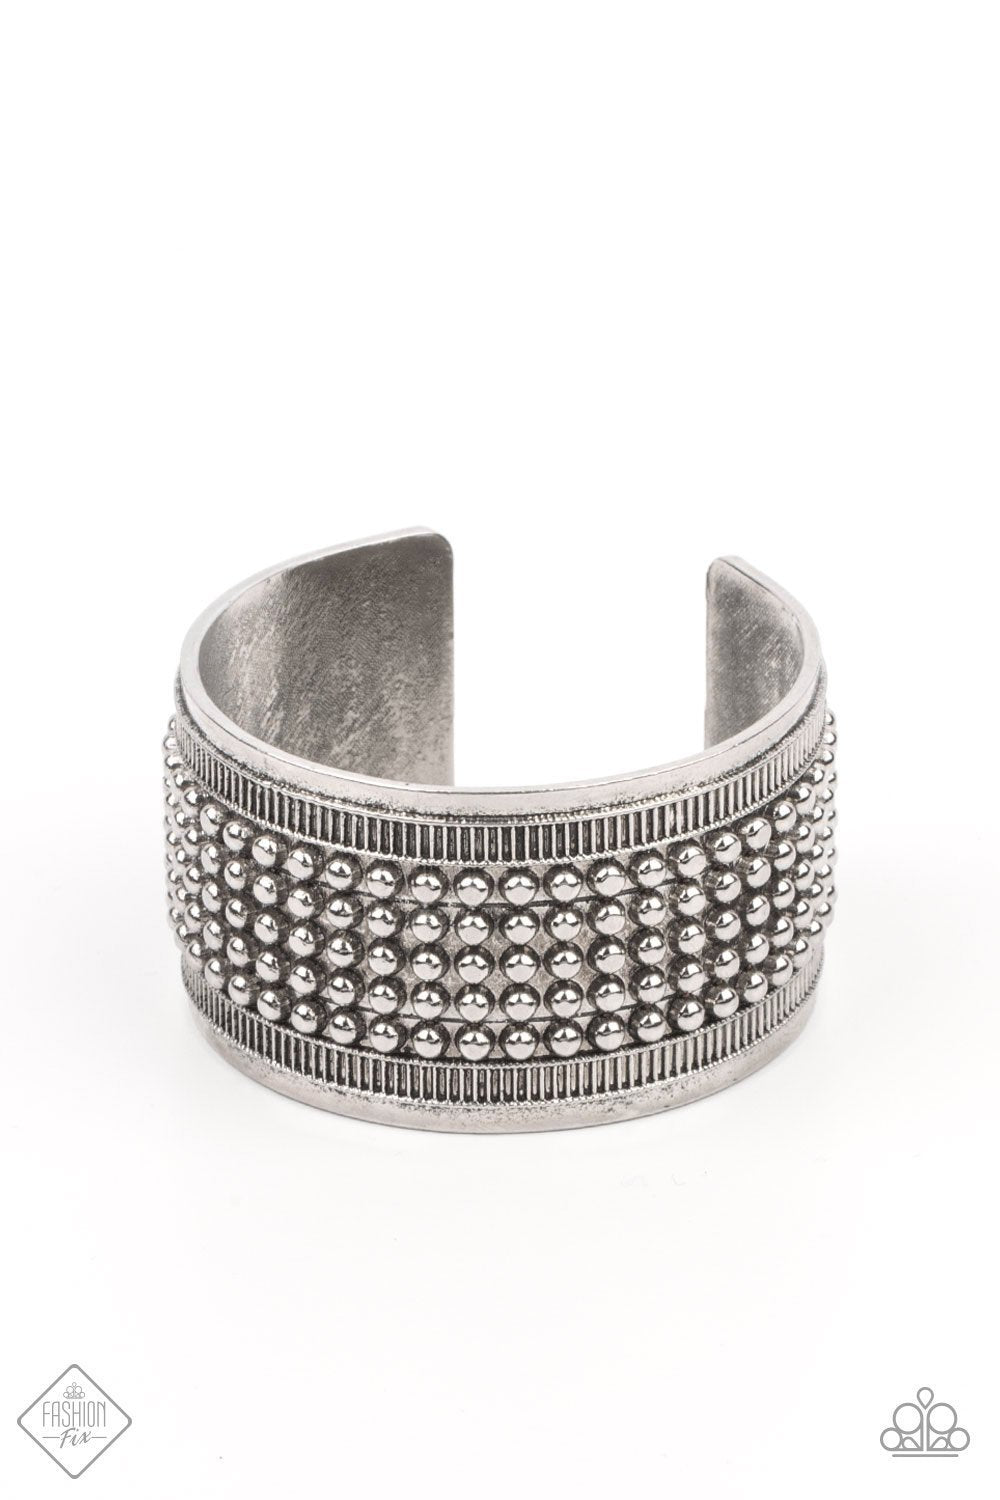 Bronco Bust Silver Cuff Bracelet - Paparazzi Accessories- lightbox - CarasShop.com - $5 Jewelry by Cara Jewels